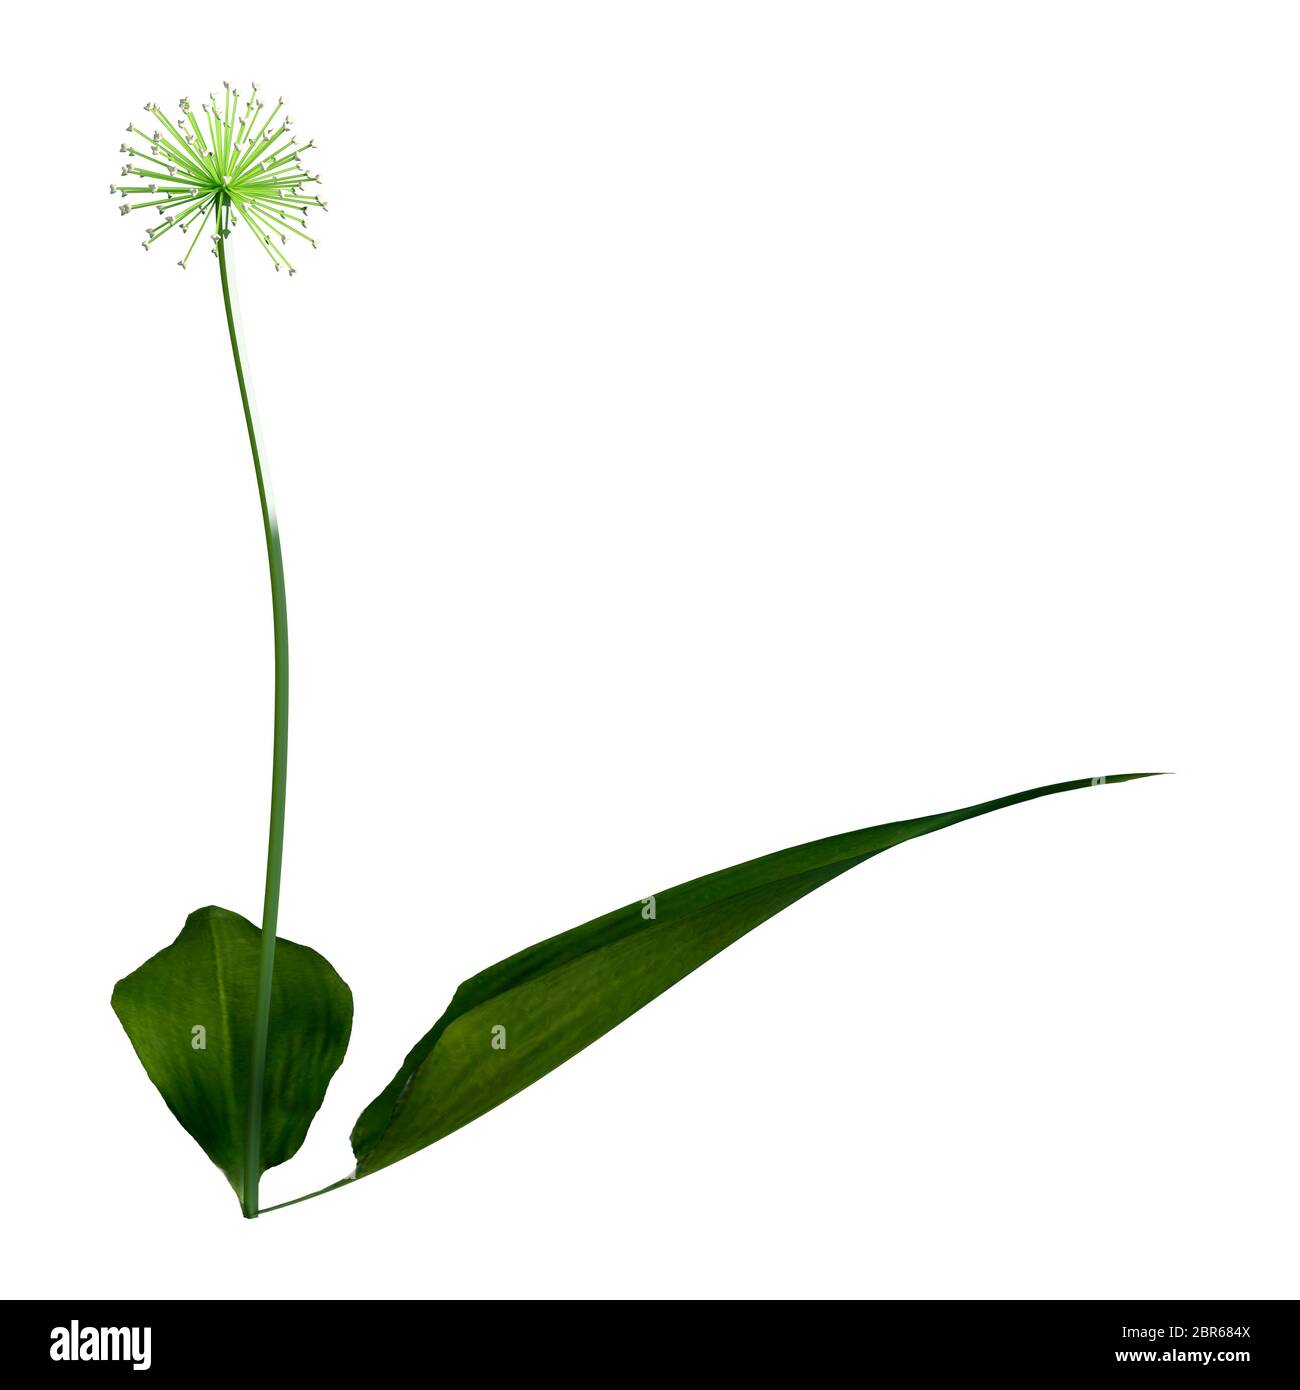 3D illustration of a wild garlic plant or Allium ursinum isolated on white background Stock Photo